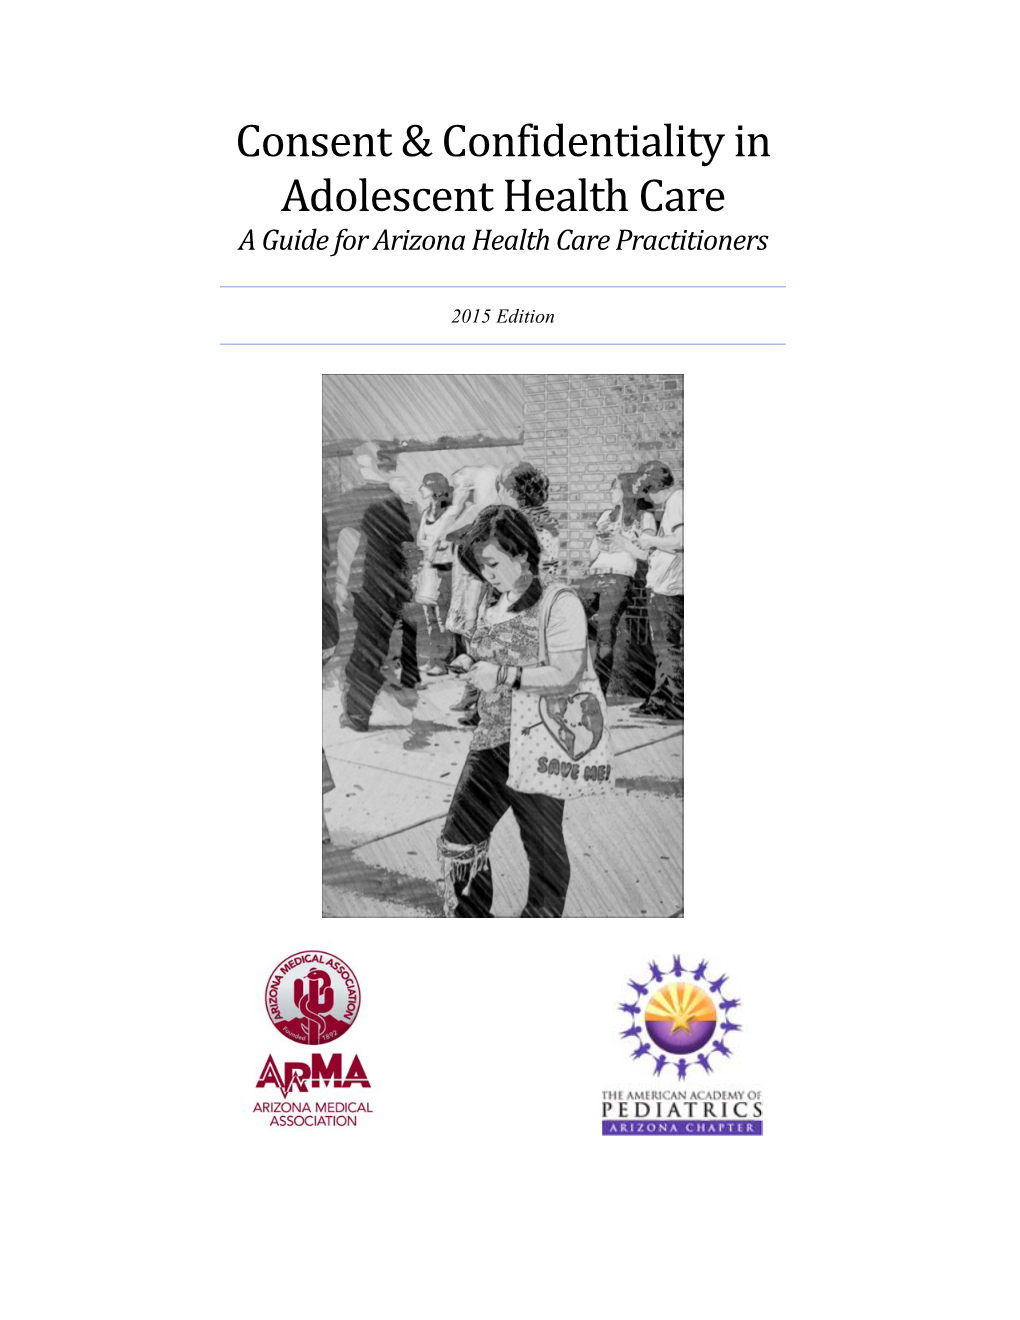 Consent & Confidentiality in Adolescent Health Care